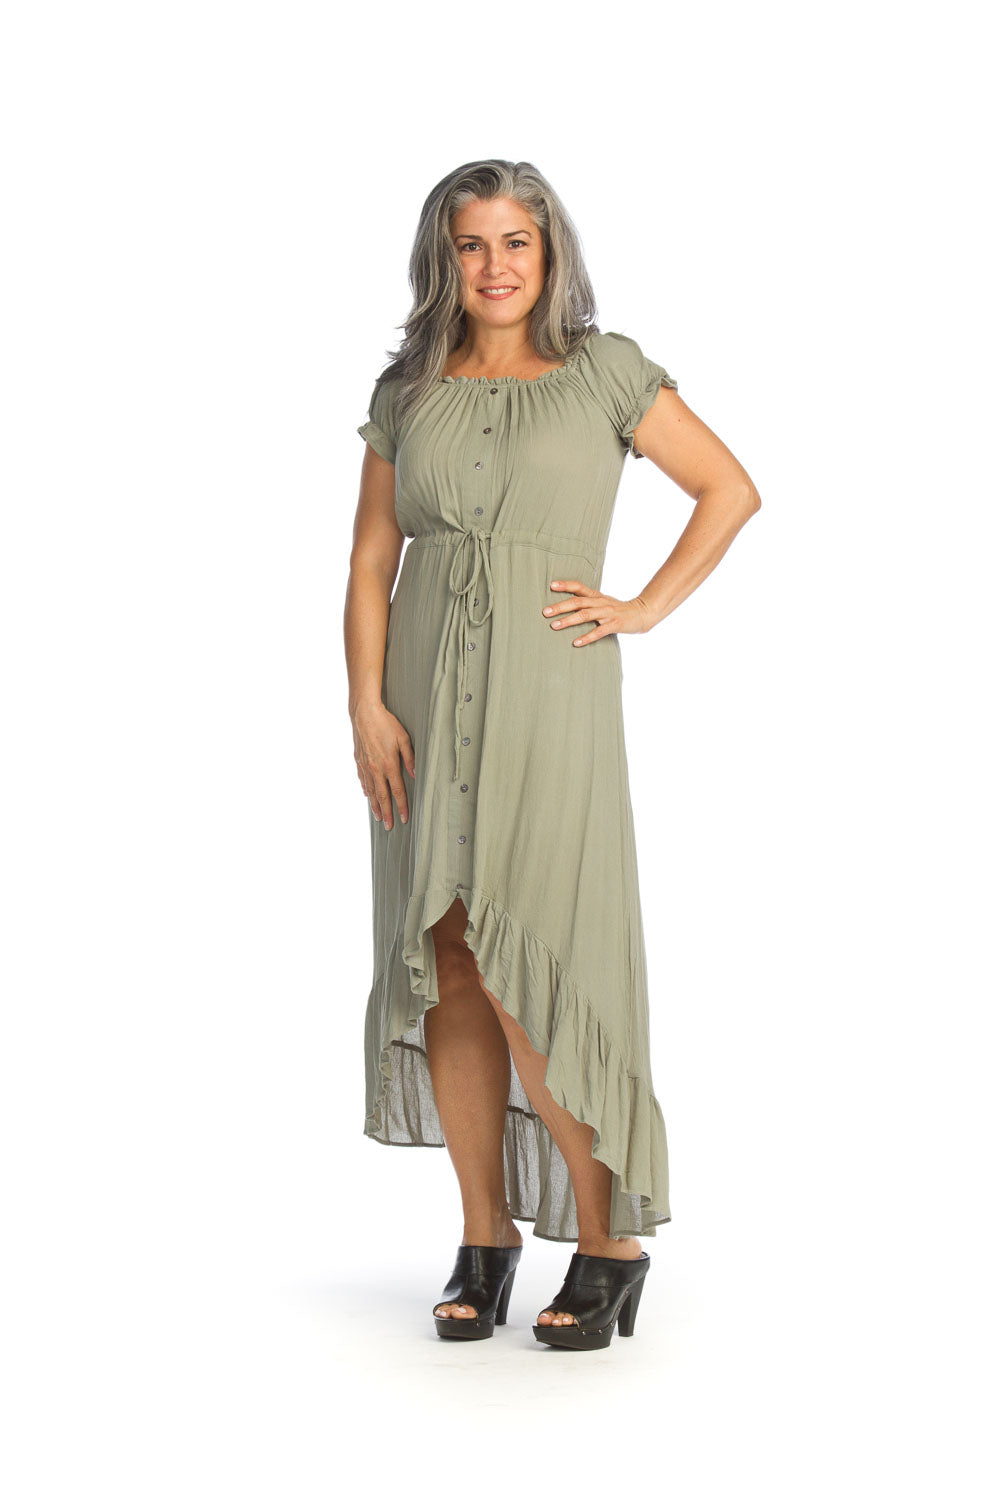 SALE Papillon PD14590 Sage OTS Short Sleeve High Low Maxi Dress